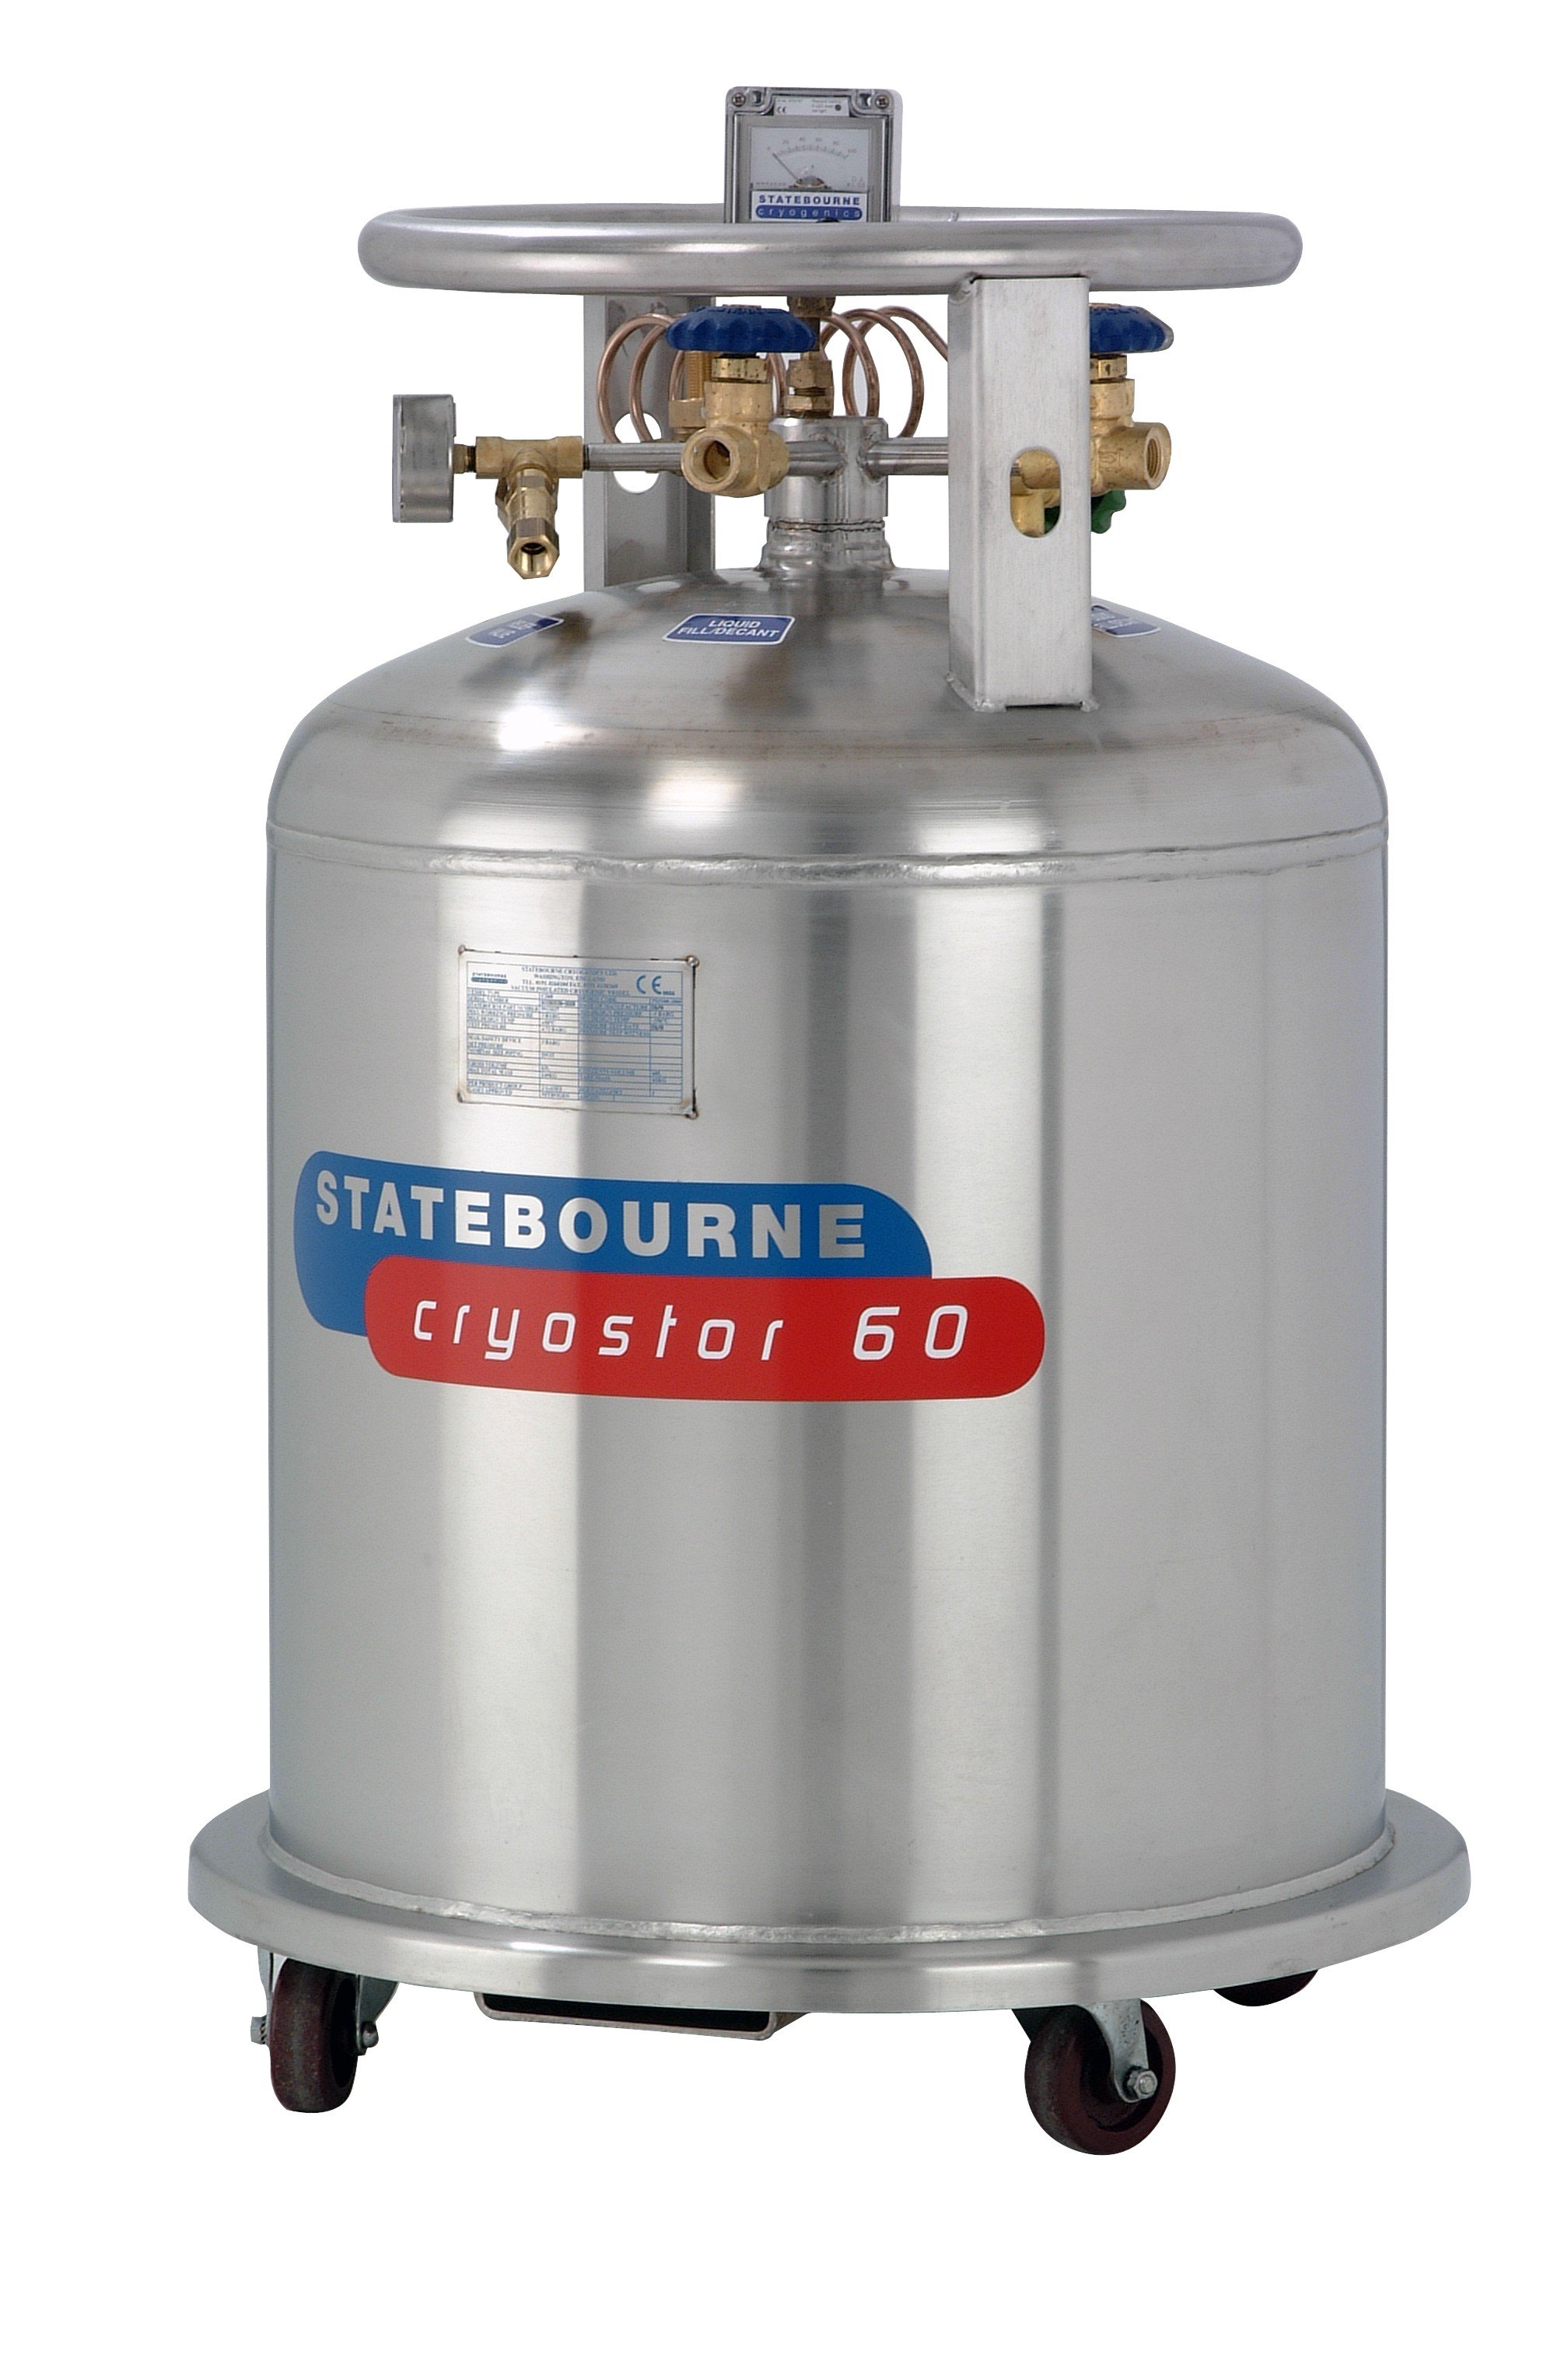 Statebourne Cryogenics 9911037 Cryostor 60 Stainless Steel Low Pressure LN2 Dewars 60 Litres for storage and dispensing liquid nitrogen